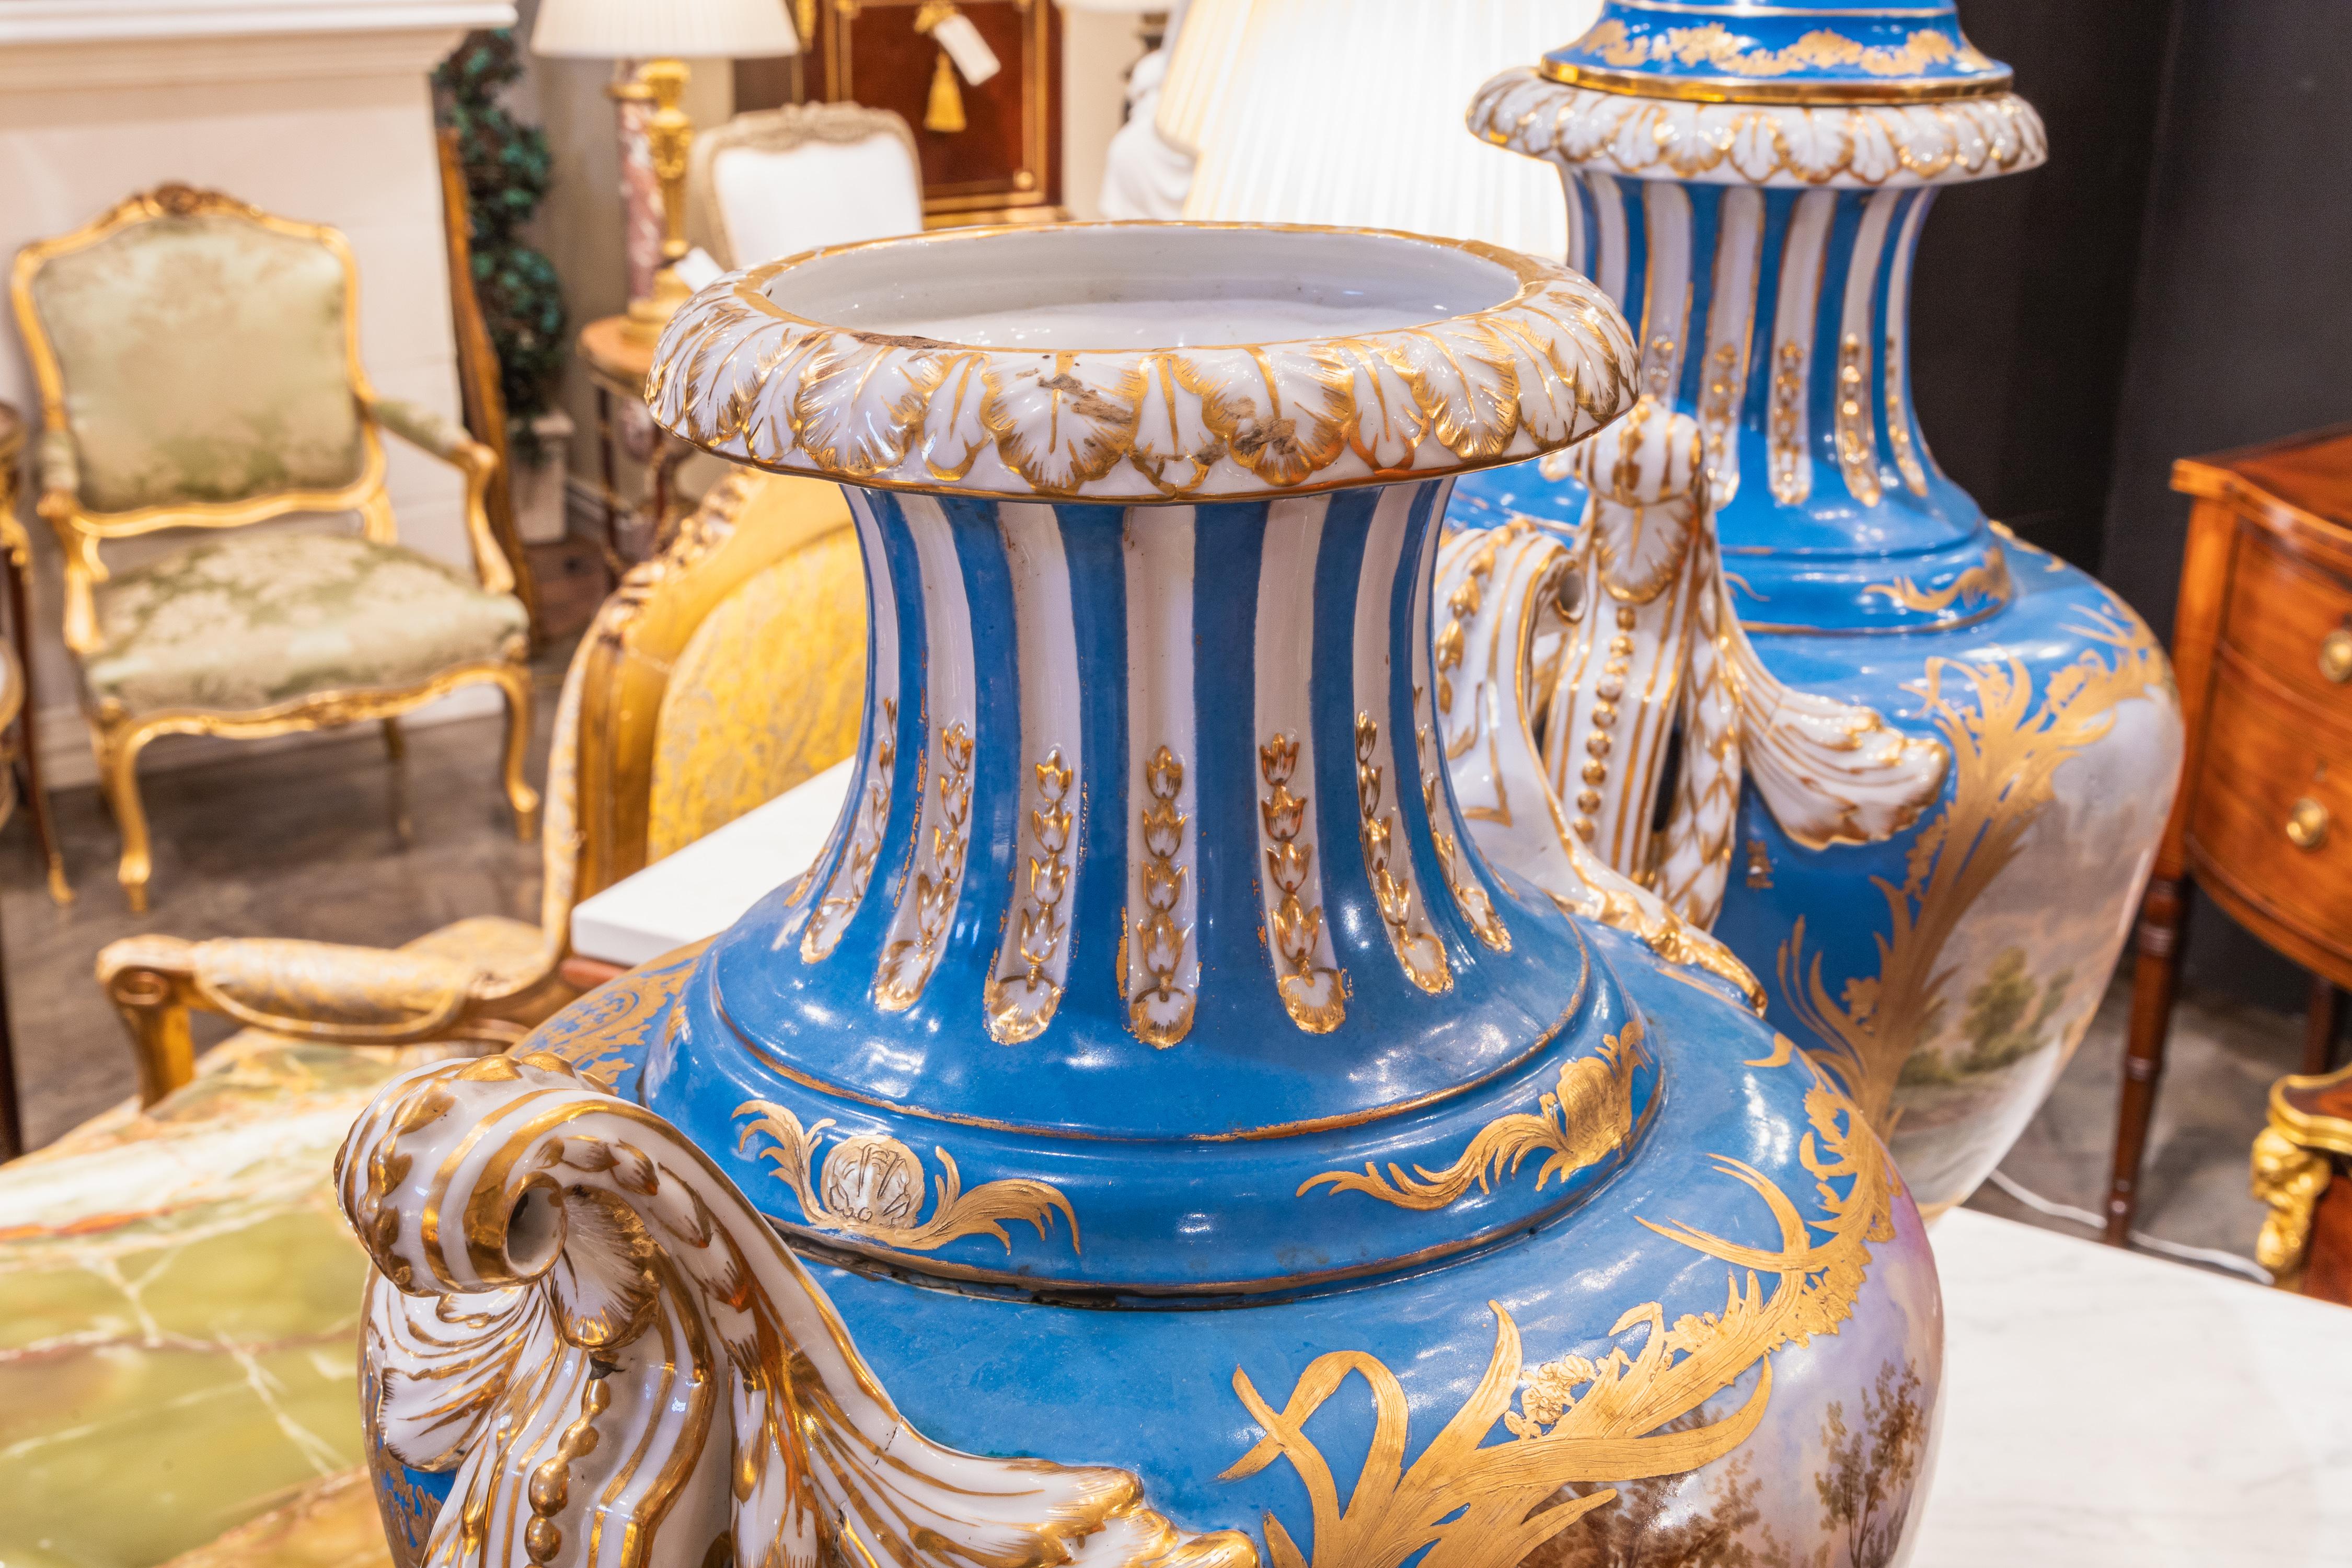 Porcelain A fine pair of early 20th c  Sevre's style celeste blue palatial porcelain vases